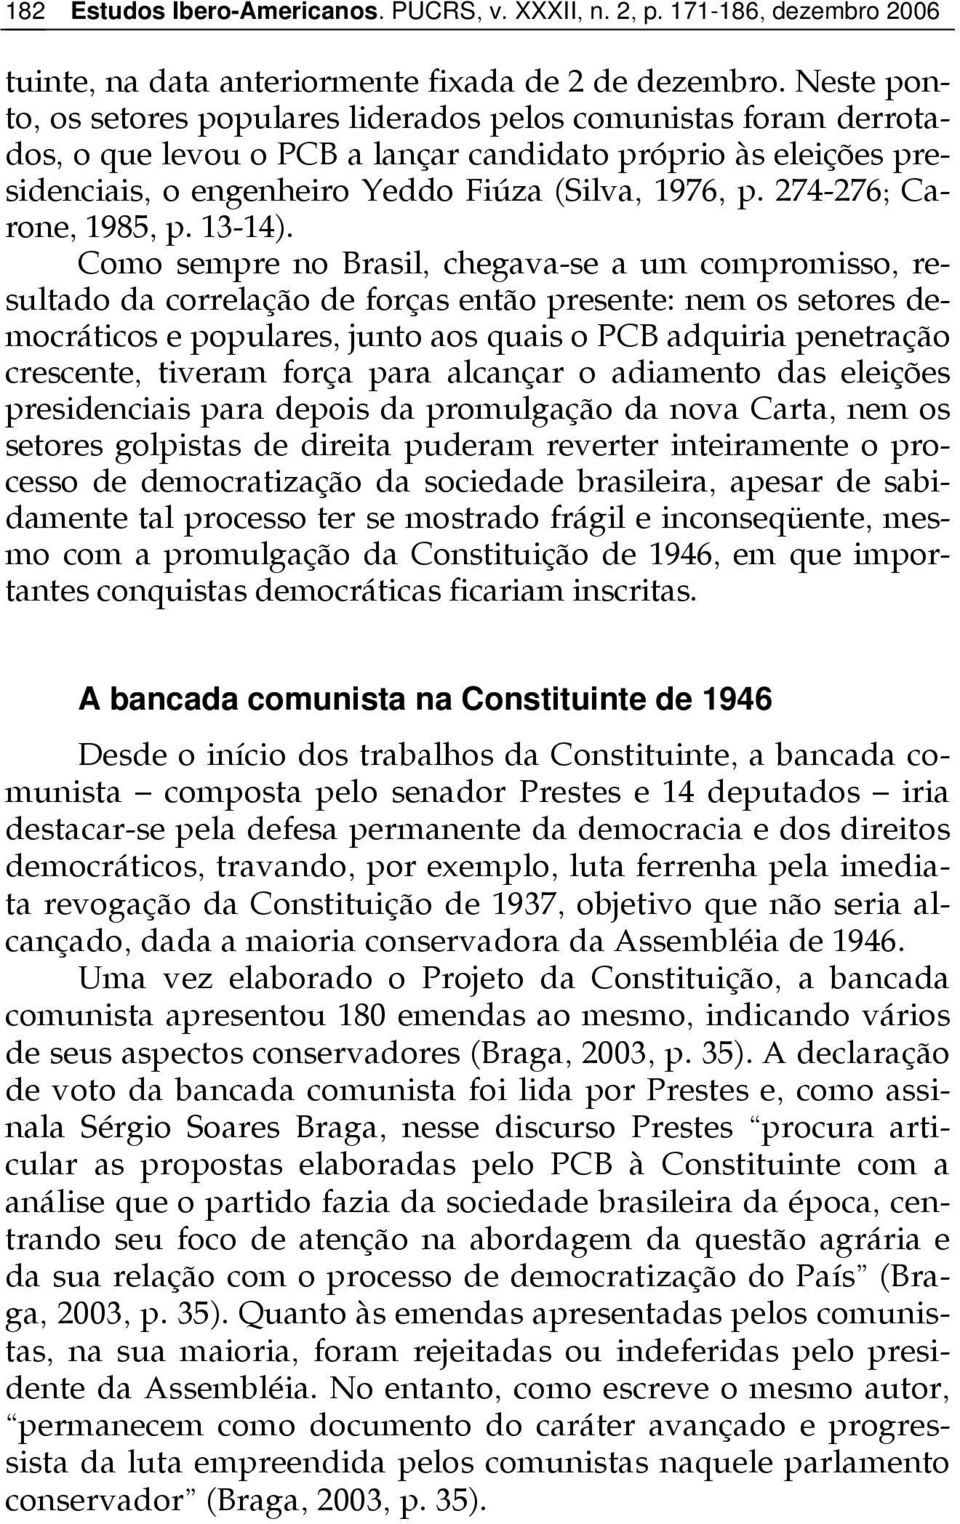 274-276; Carone, 1985, p. 13-14).